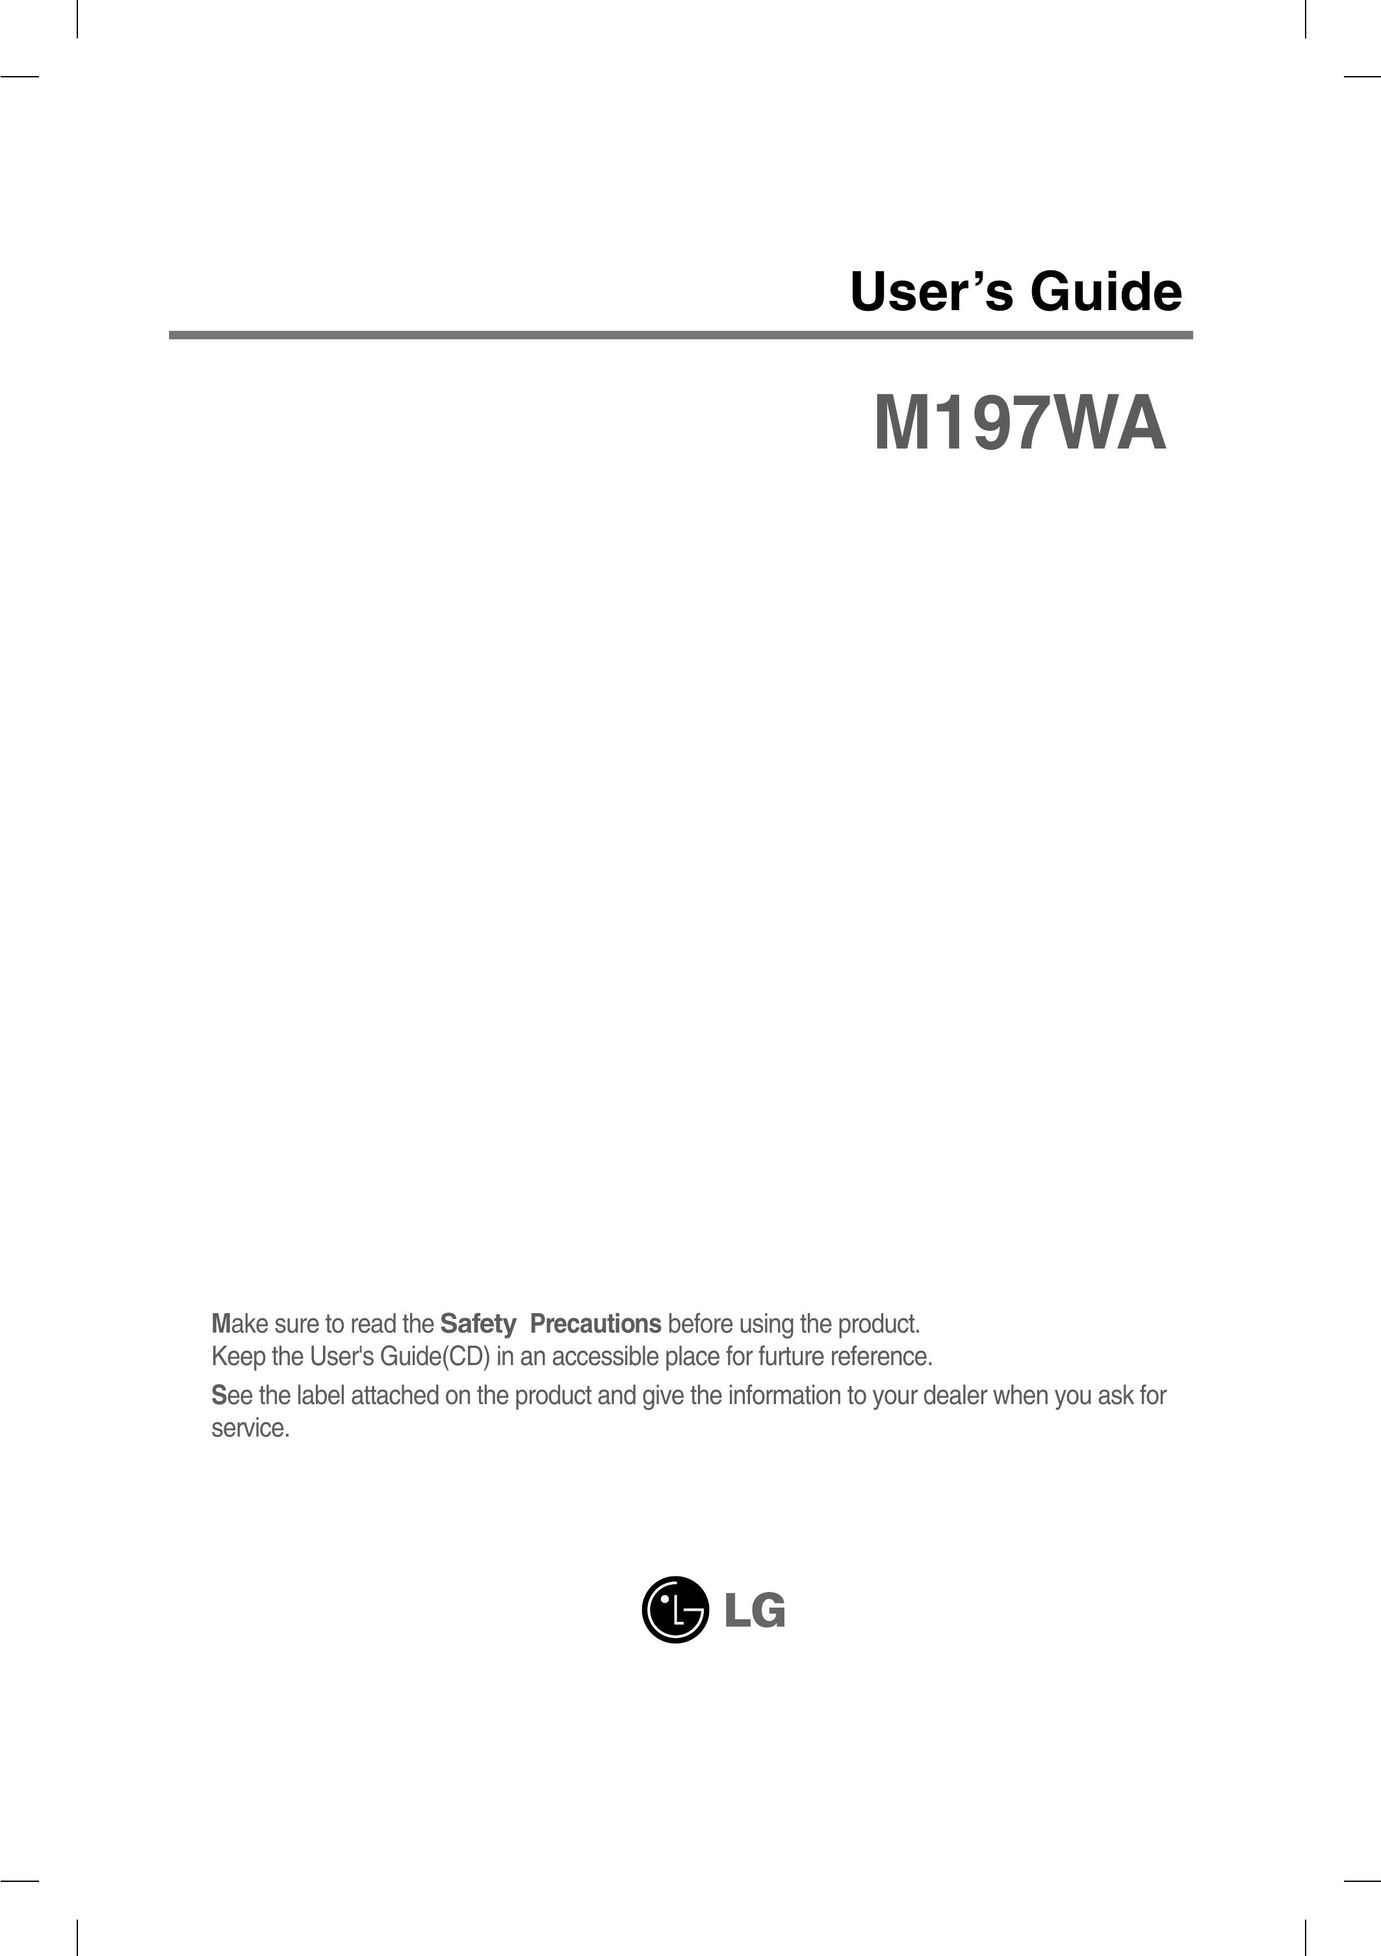 LG Electronics M197WA Personal Computer User Manual